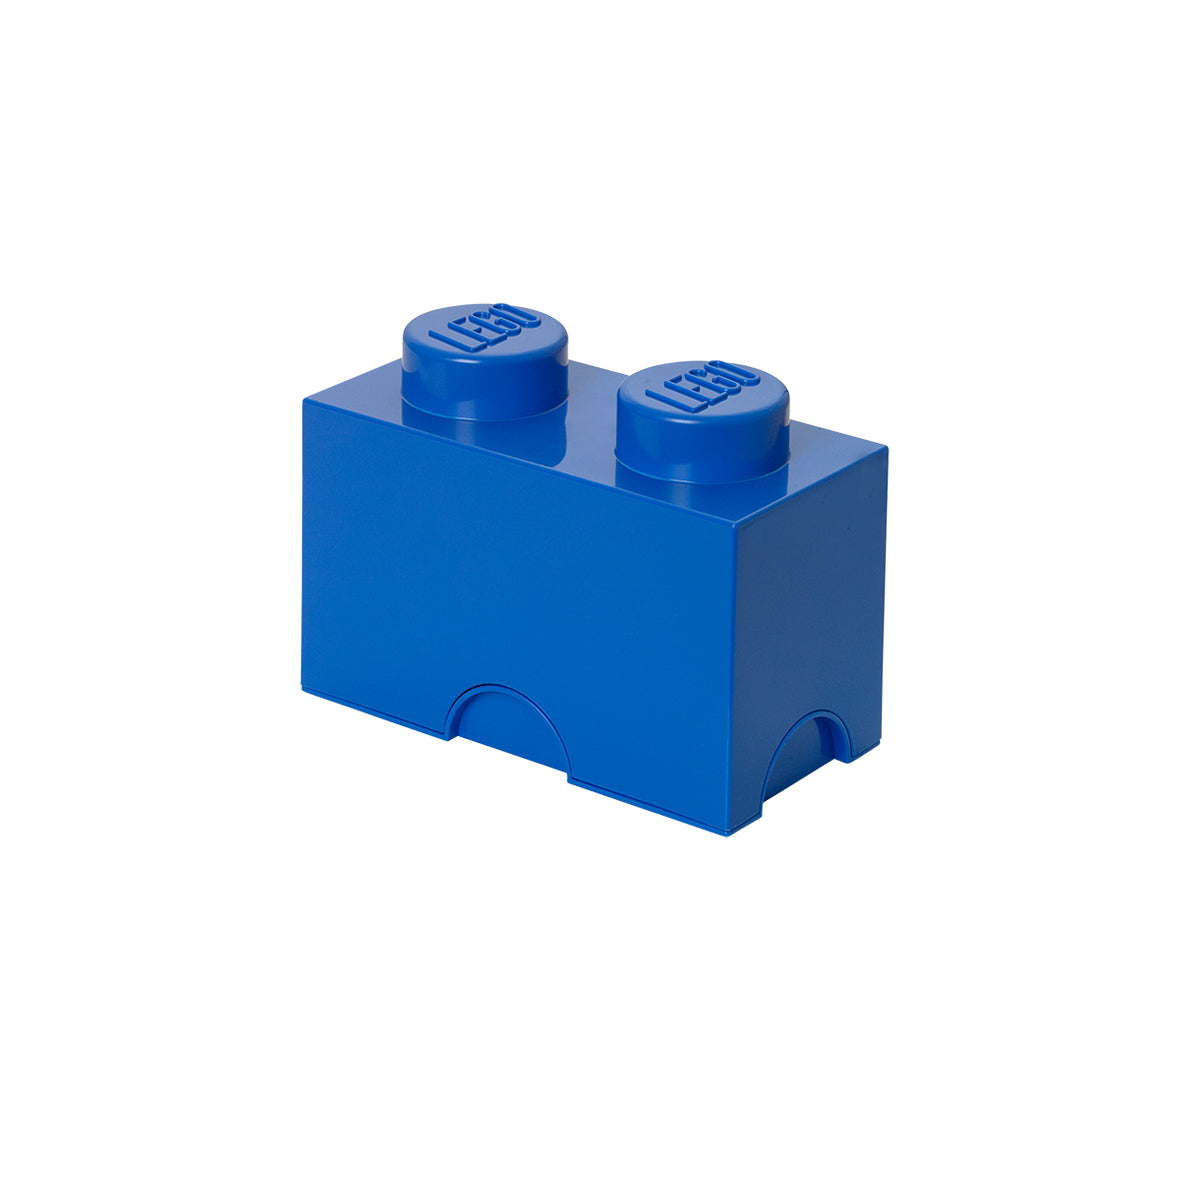 LEGO Brick Storage Box, Small- Blue